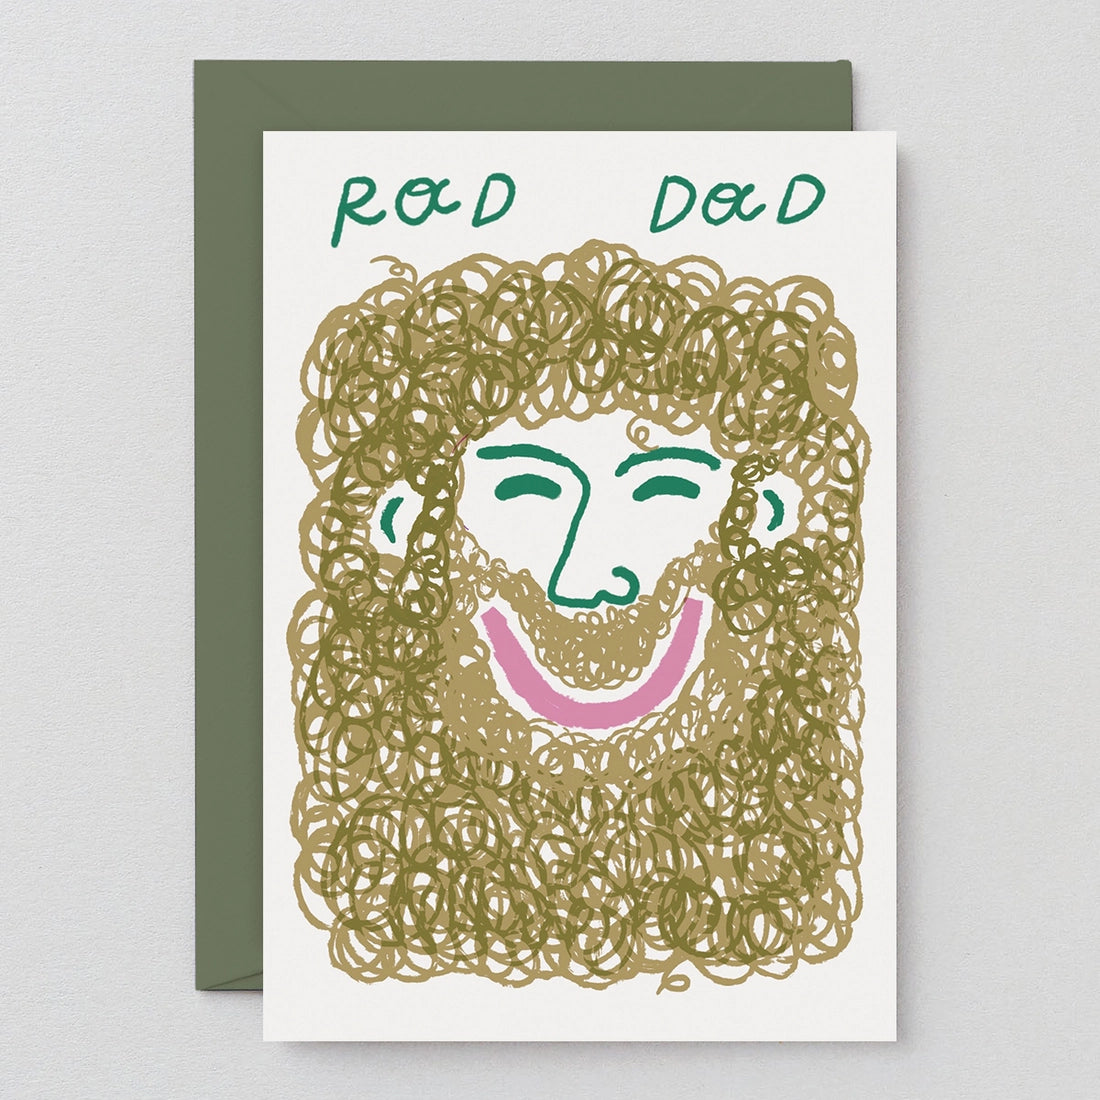 “Rad Dad” Greeting Card